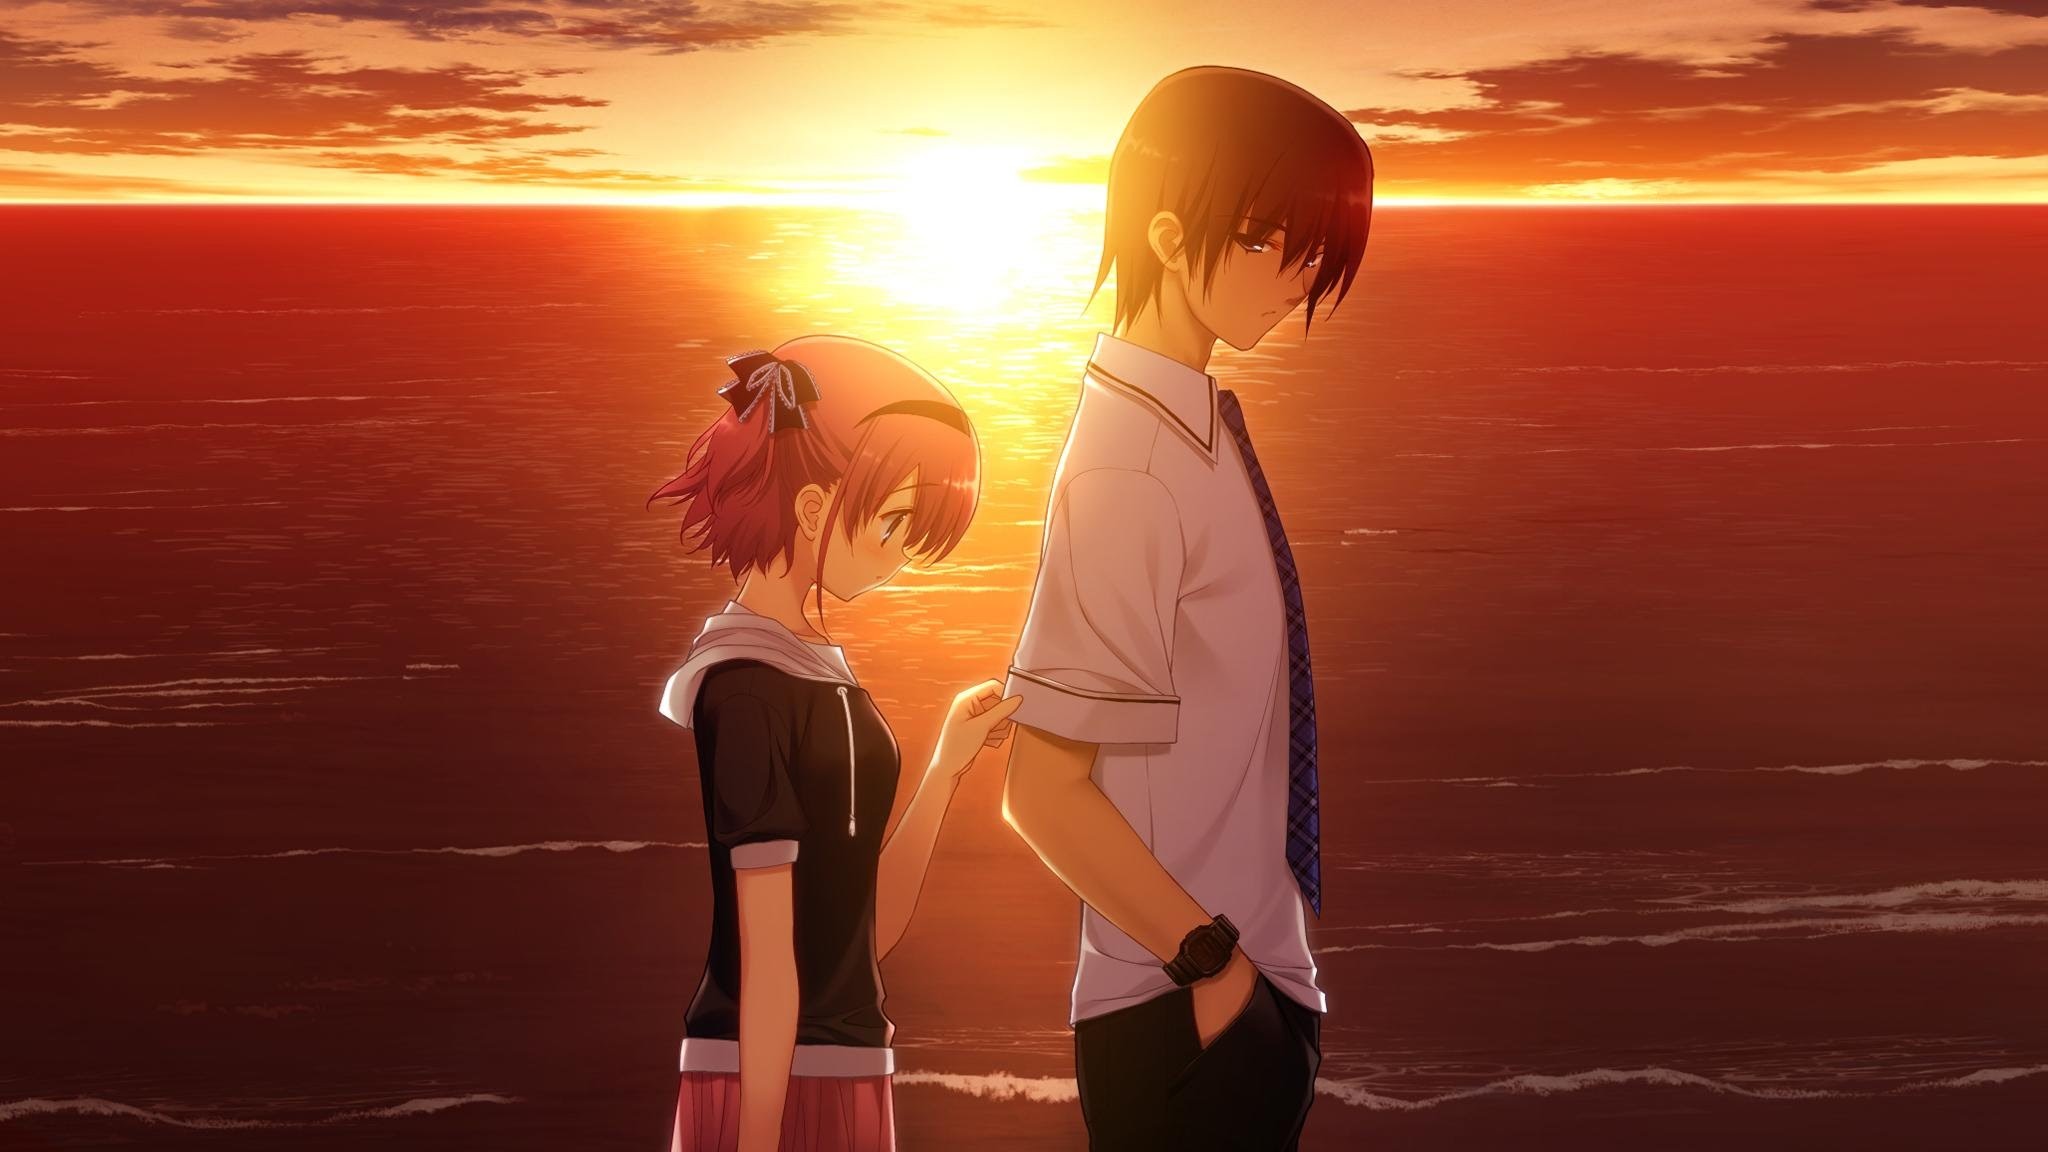 Sad Anime Couple